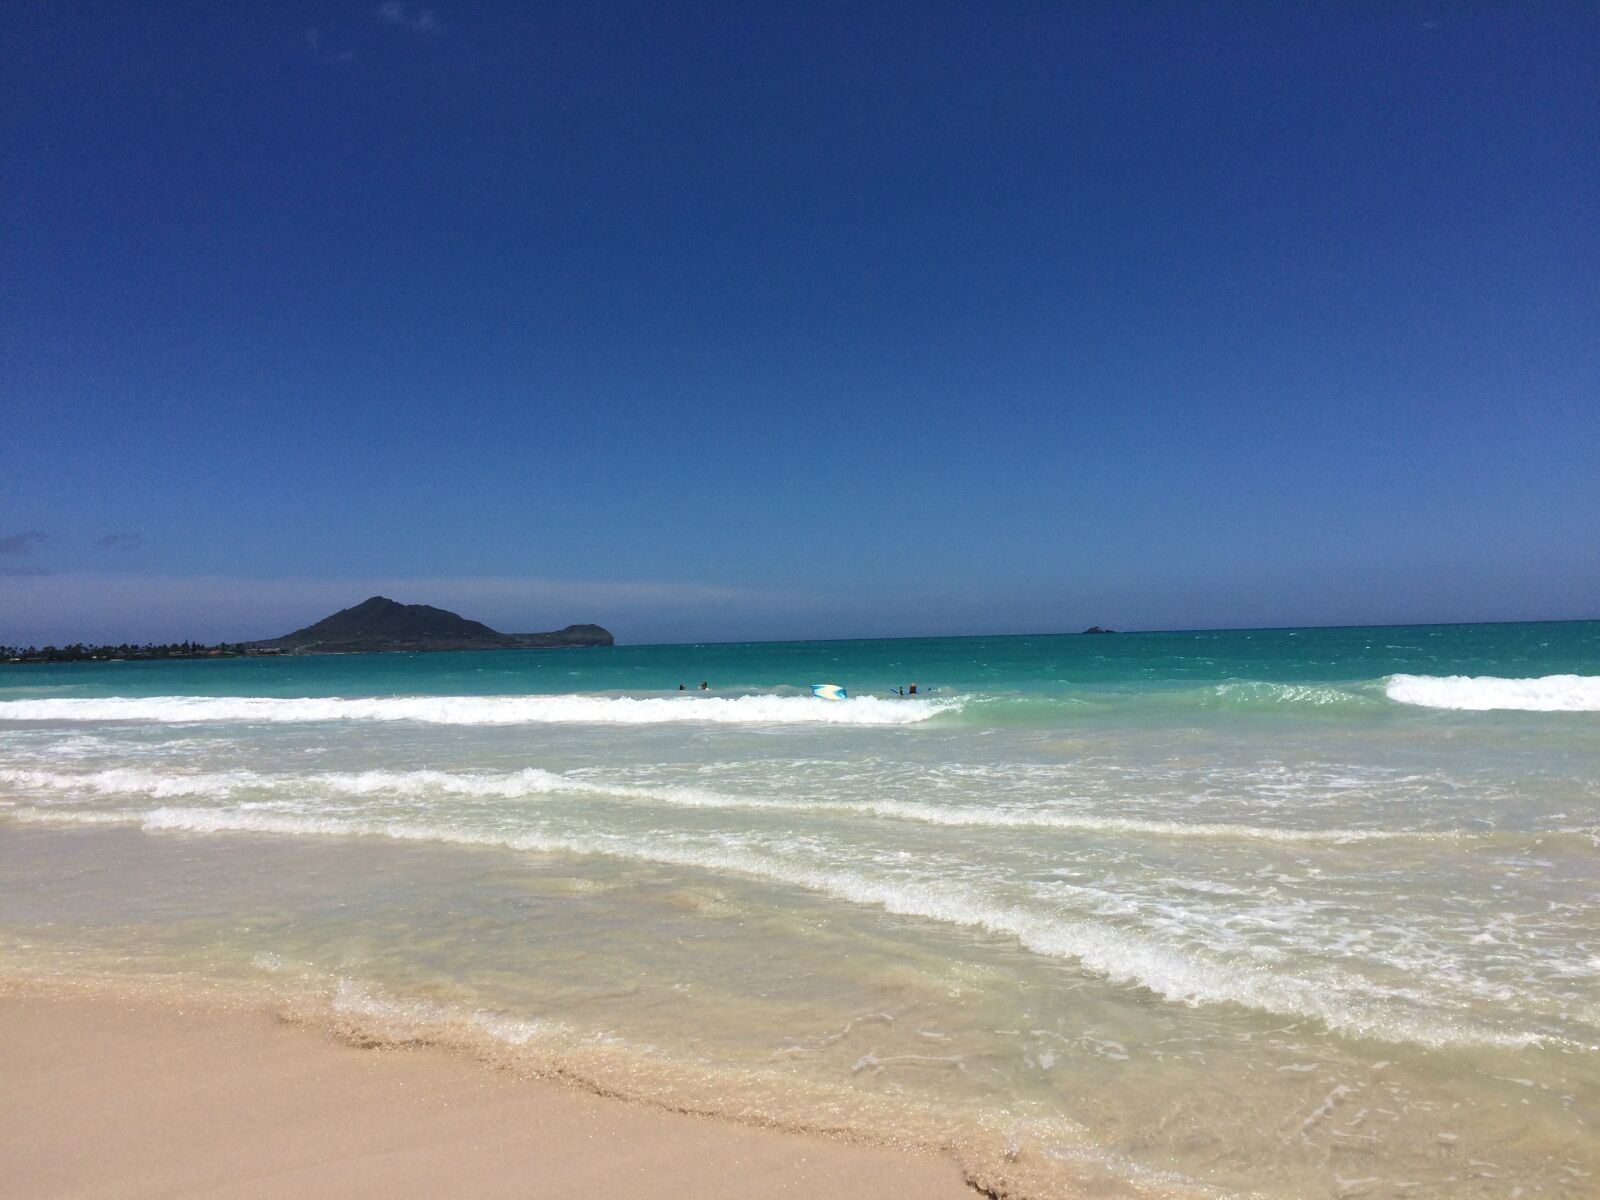 iPhone 5s back camera 4.15mm f/2.2 sample photo. Hawaii, beach, ocean photography